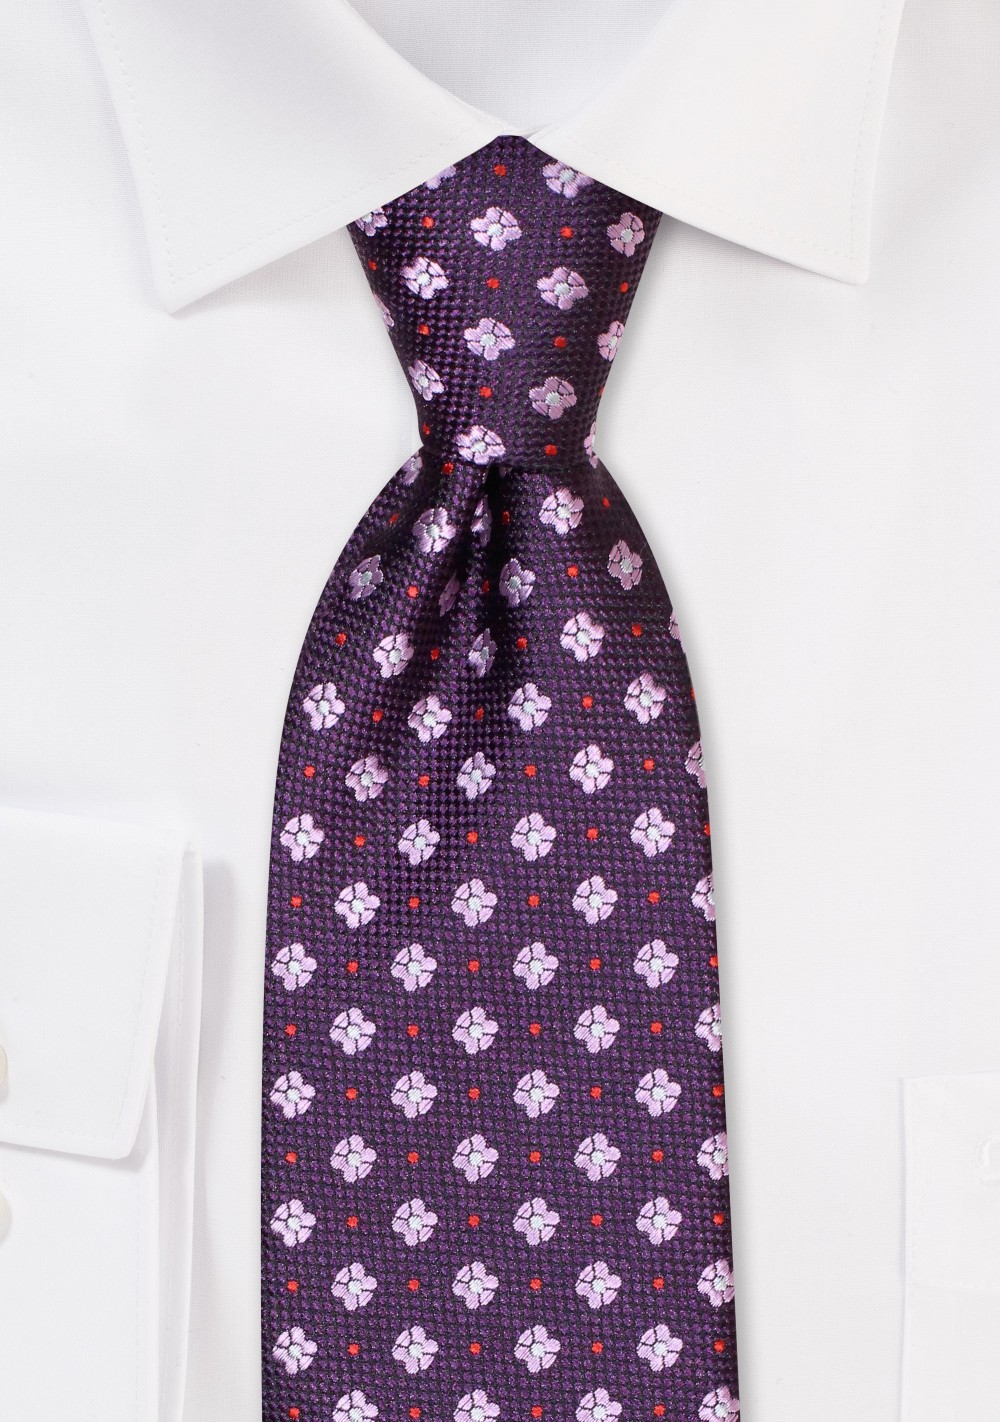 Purple Floral Tie in XL Length